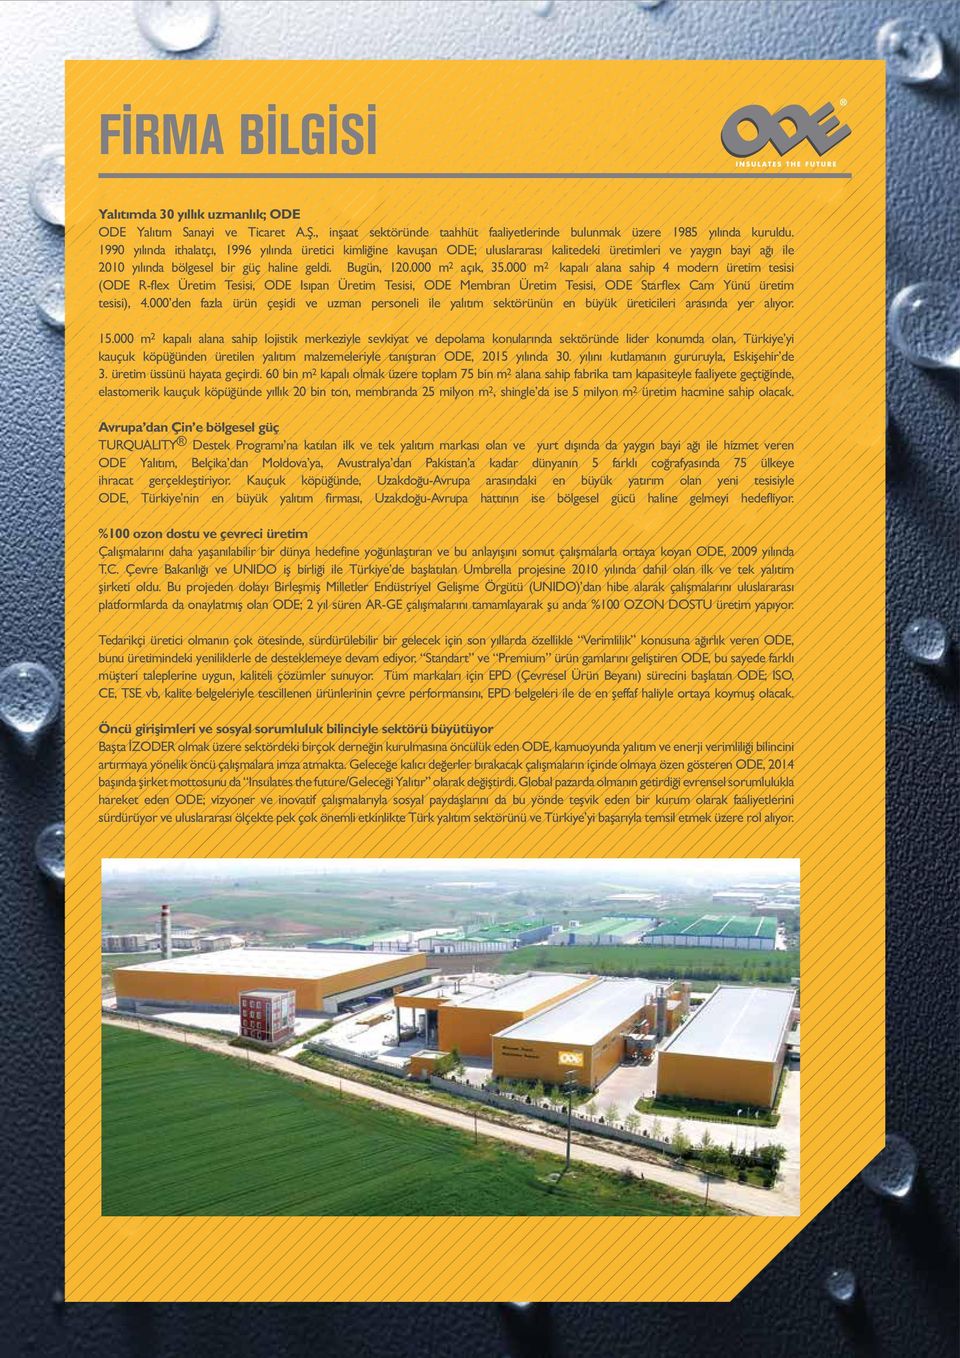 000 m 2 ² kapalı alana sahip 4 modern üretim tesisi (ODE R-flex Üretim Tesisi, ODE Isıpan Üretim Tesisi, ODE Membran Üretim Tesisi, ODE Starflex Cam Yünü üretim tesisi), 4.